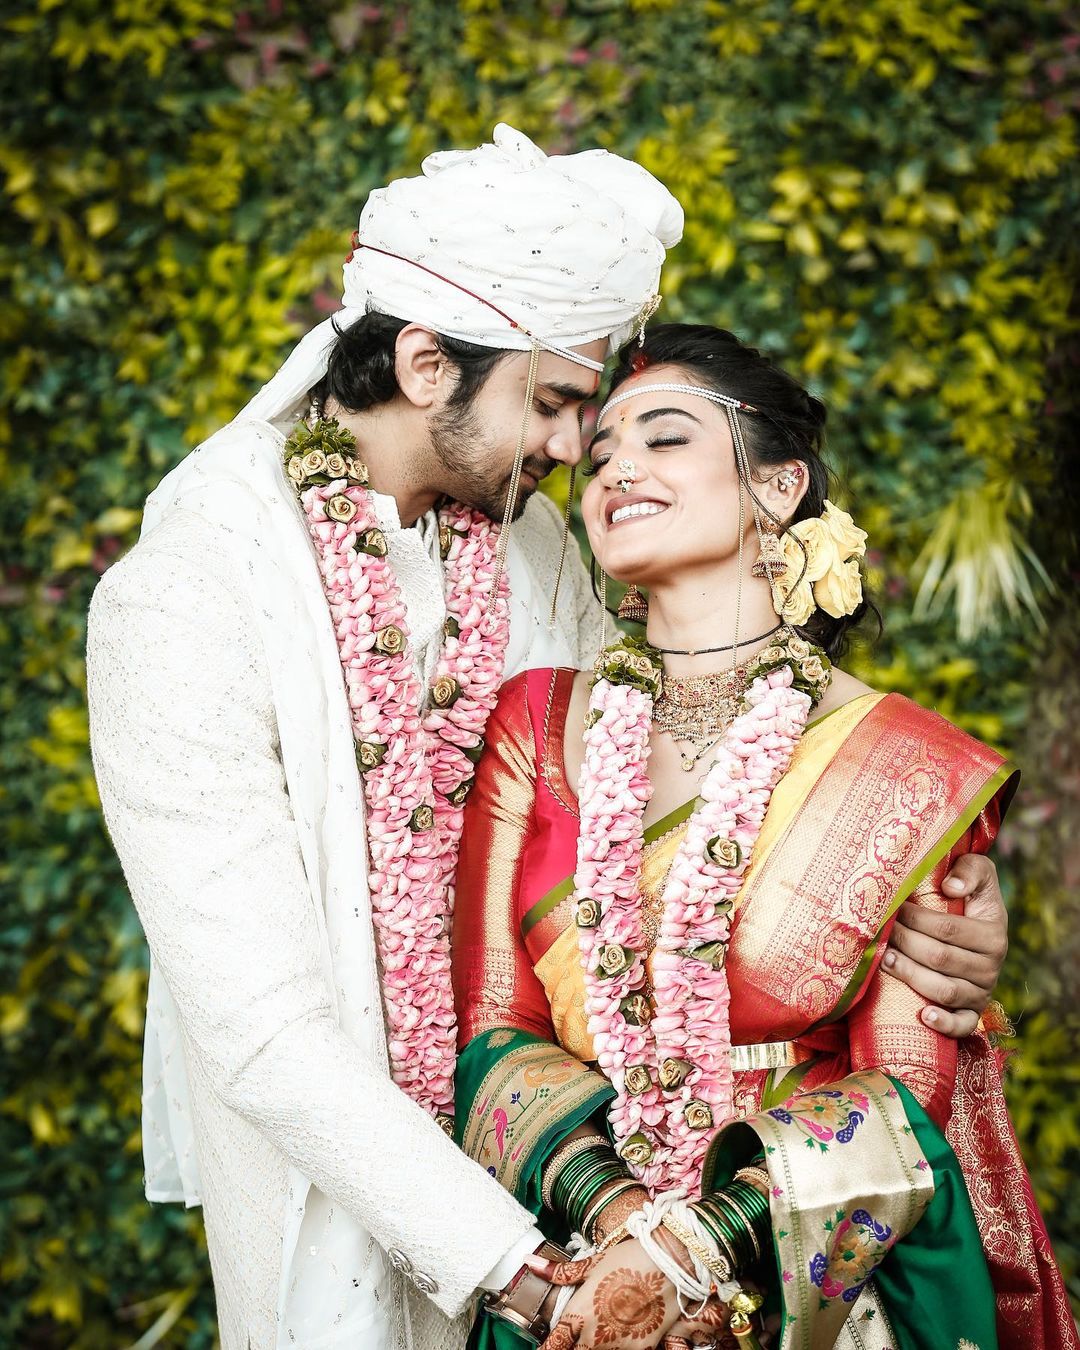 Hruta Durgule Prateek Shah Wedding